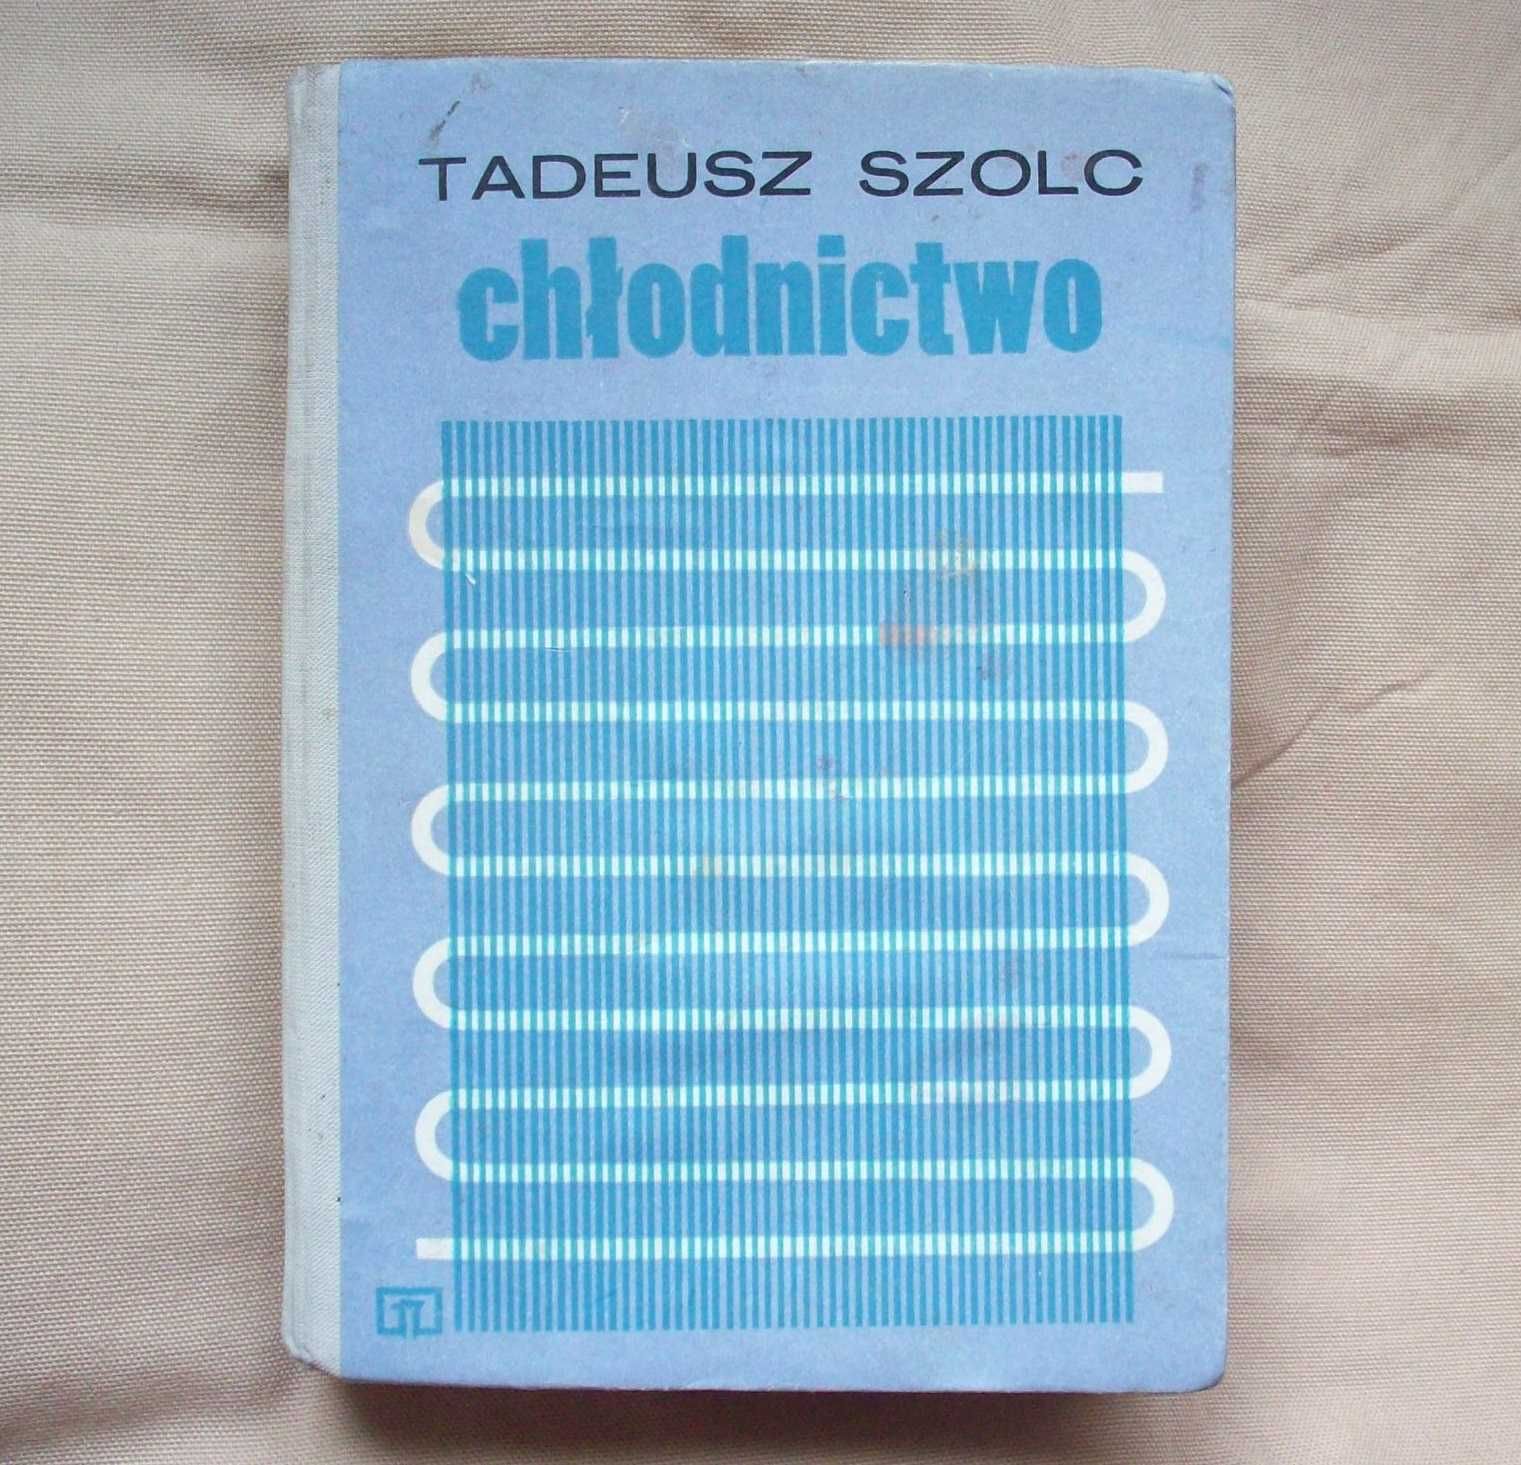 Chłodnictwo, T.Szolc, 1980.